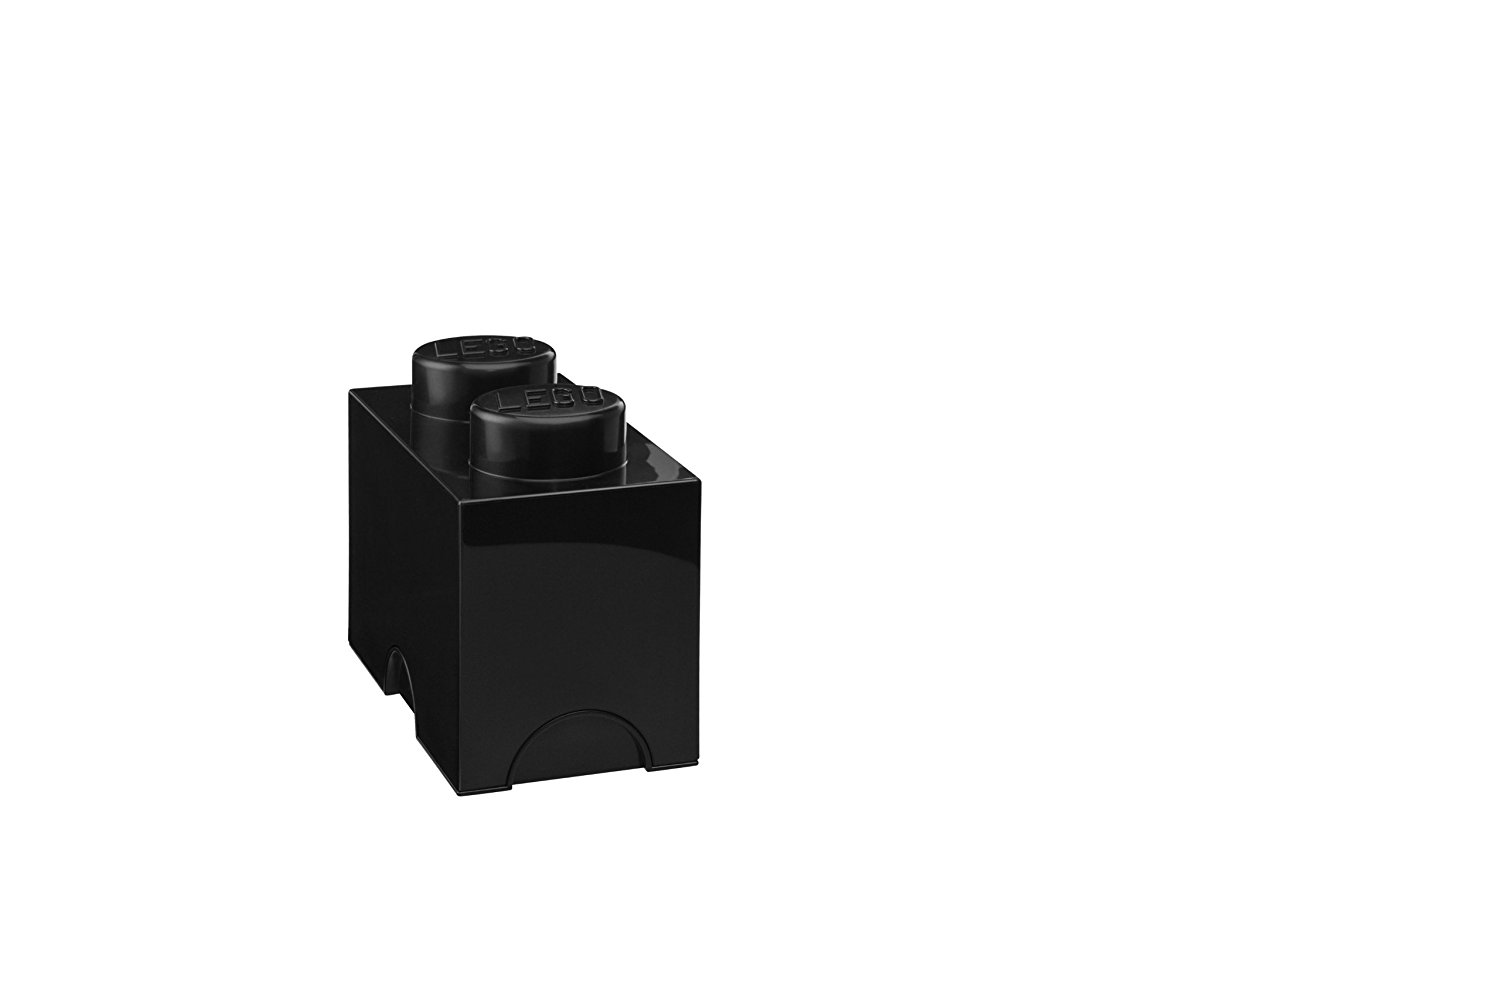 LEGO Storage Brick 2, Black. Product Dimensions	9.8 x 4.9 x 7.1 inches